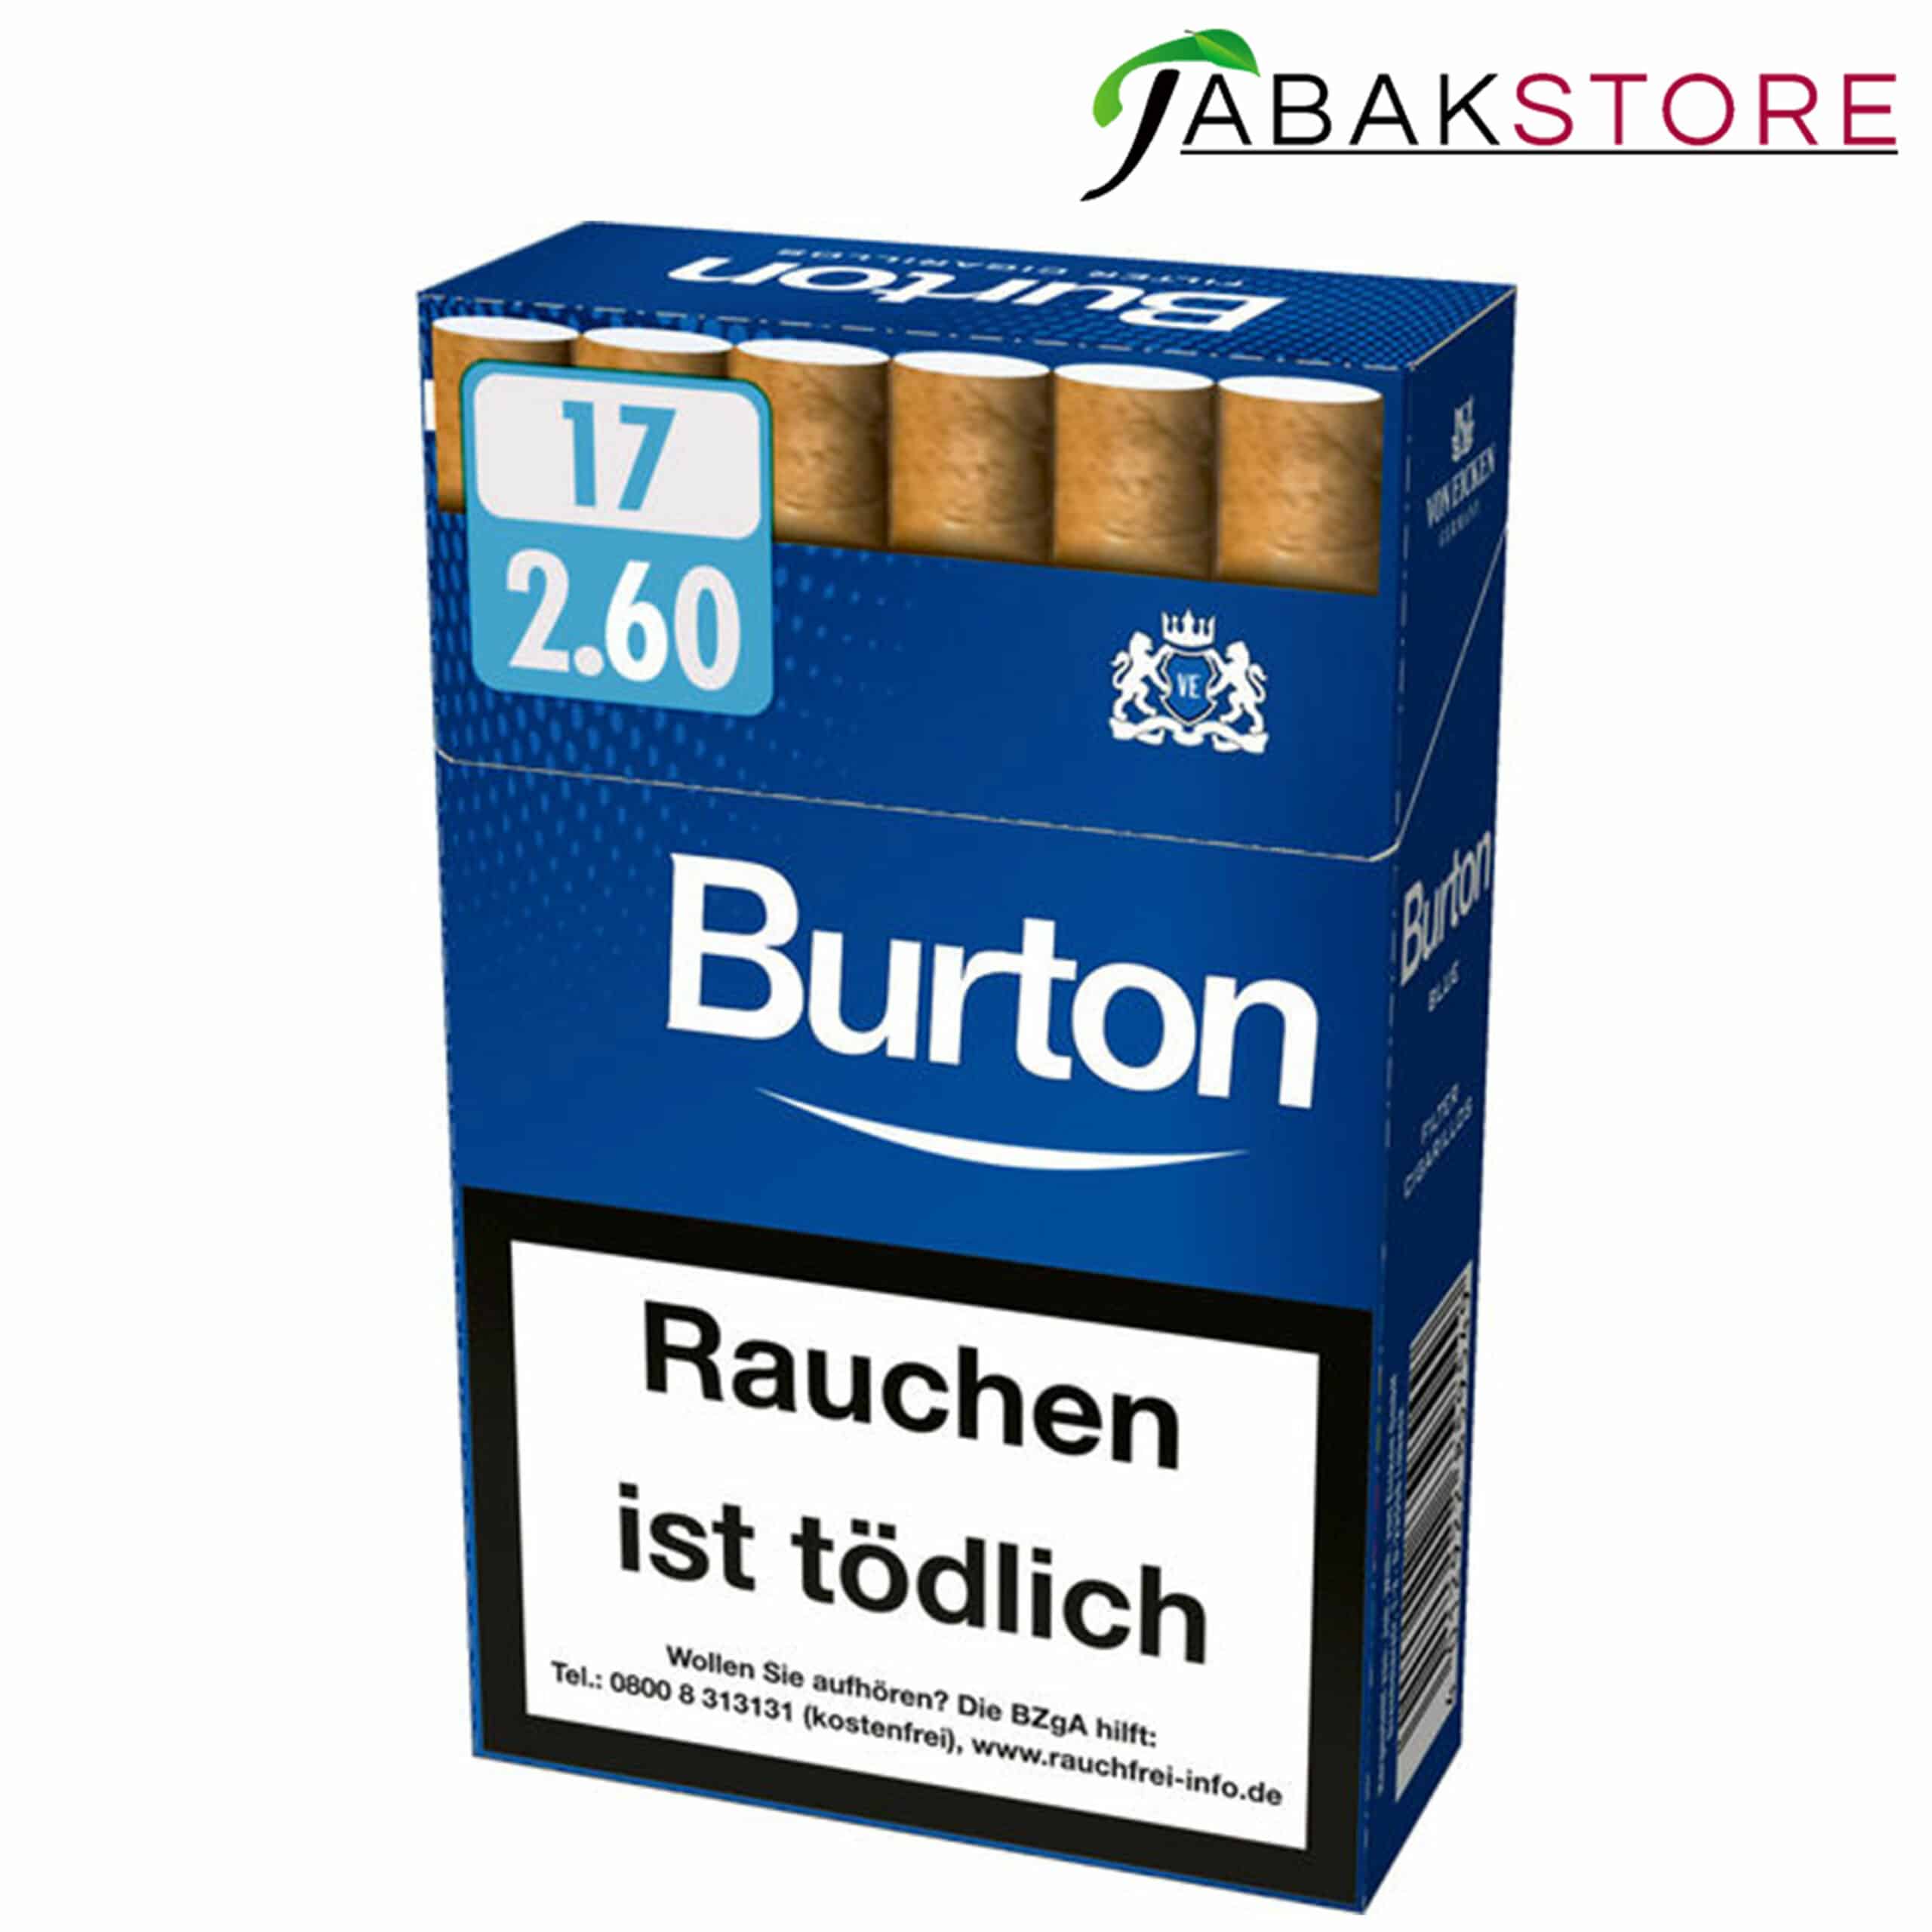 Burton Blue 2,60 Euro | 17 Zigarillos